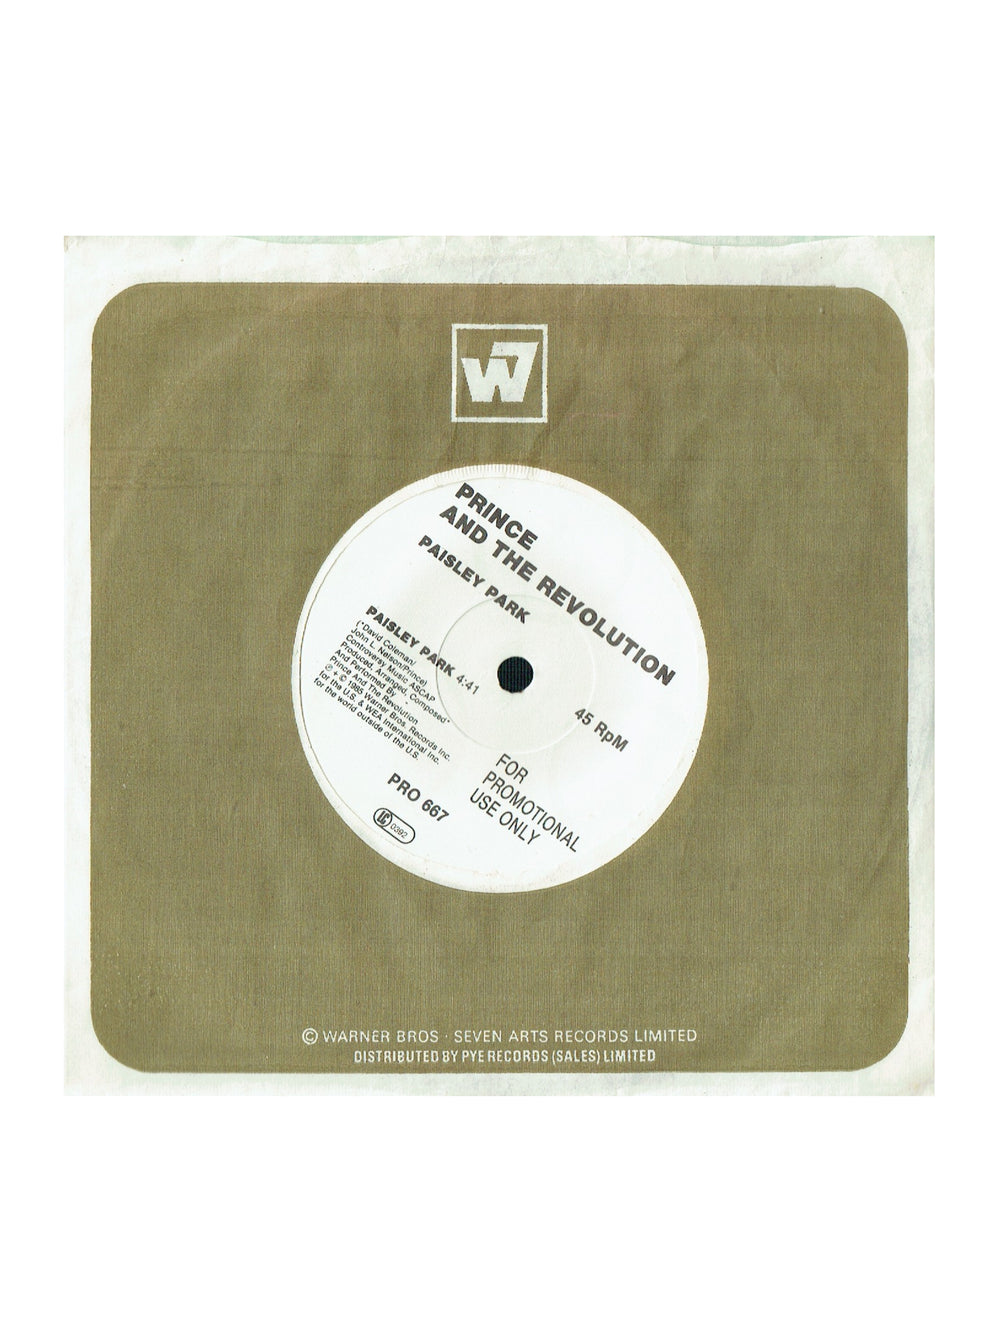 Prince – & The Revolution Paisley Park 7 Inch Vinyl Single 1985 PROMOTIONAL WHITE LABEL